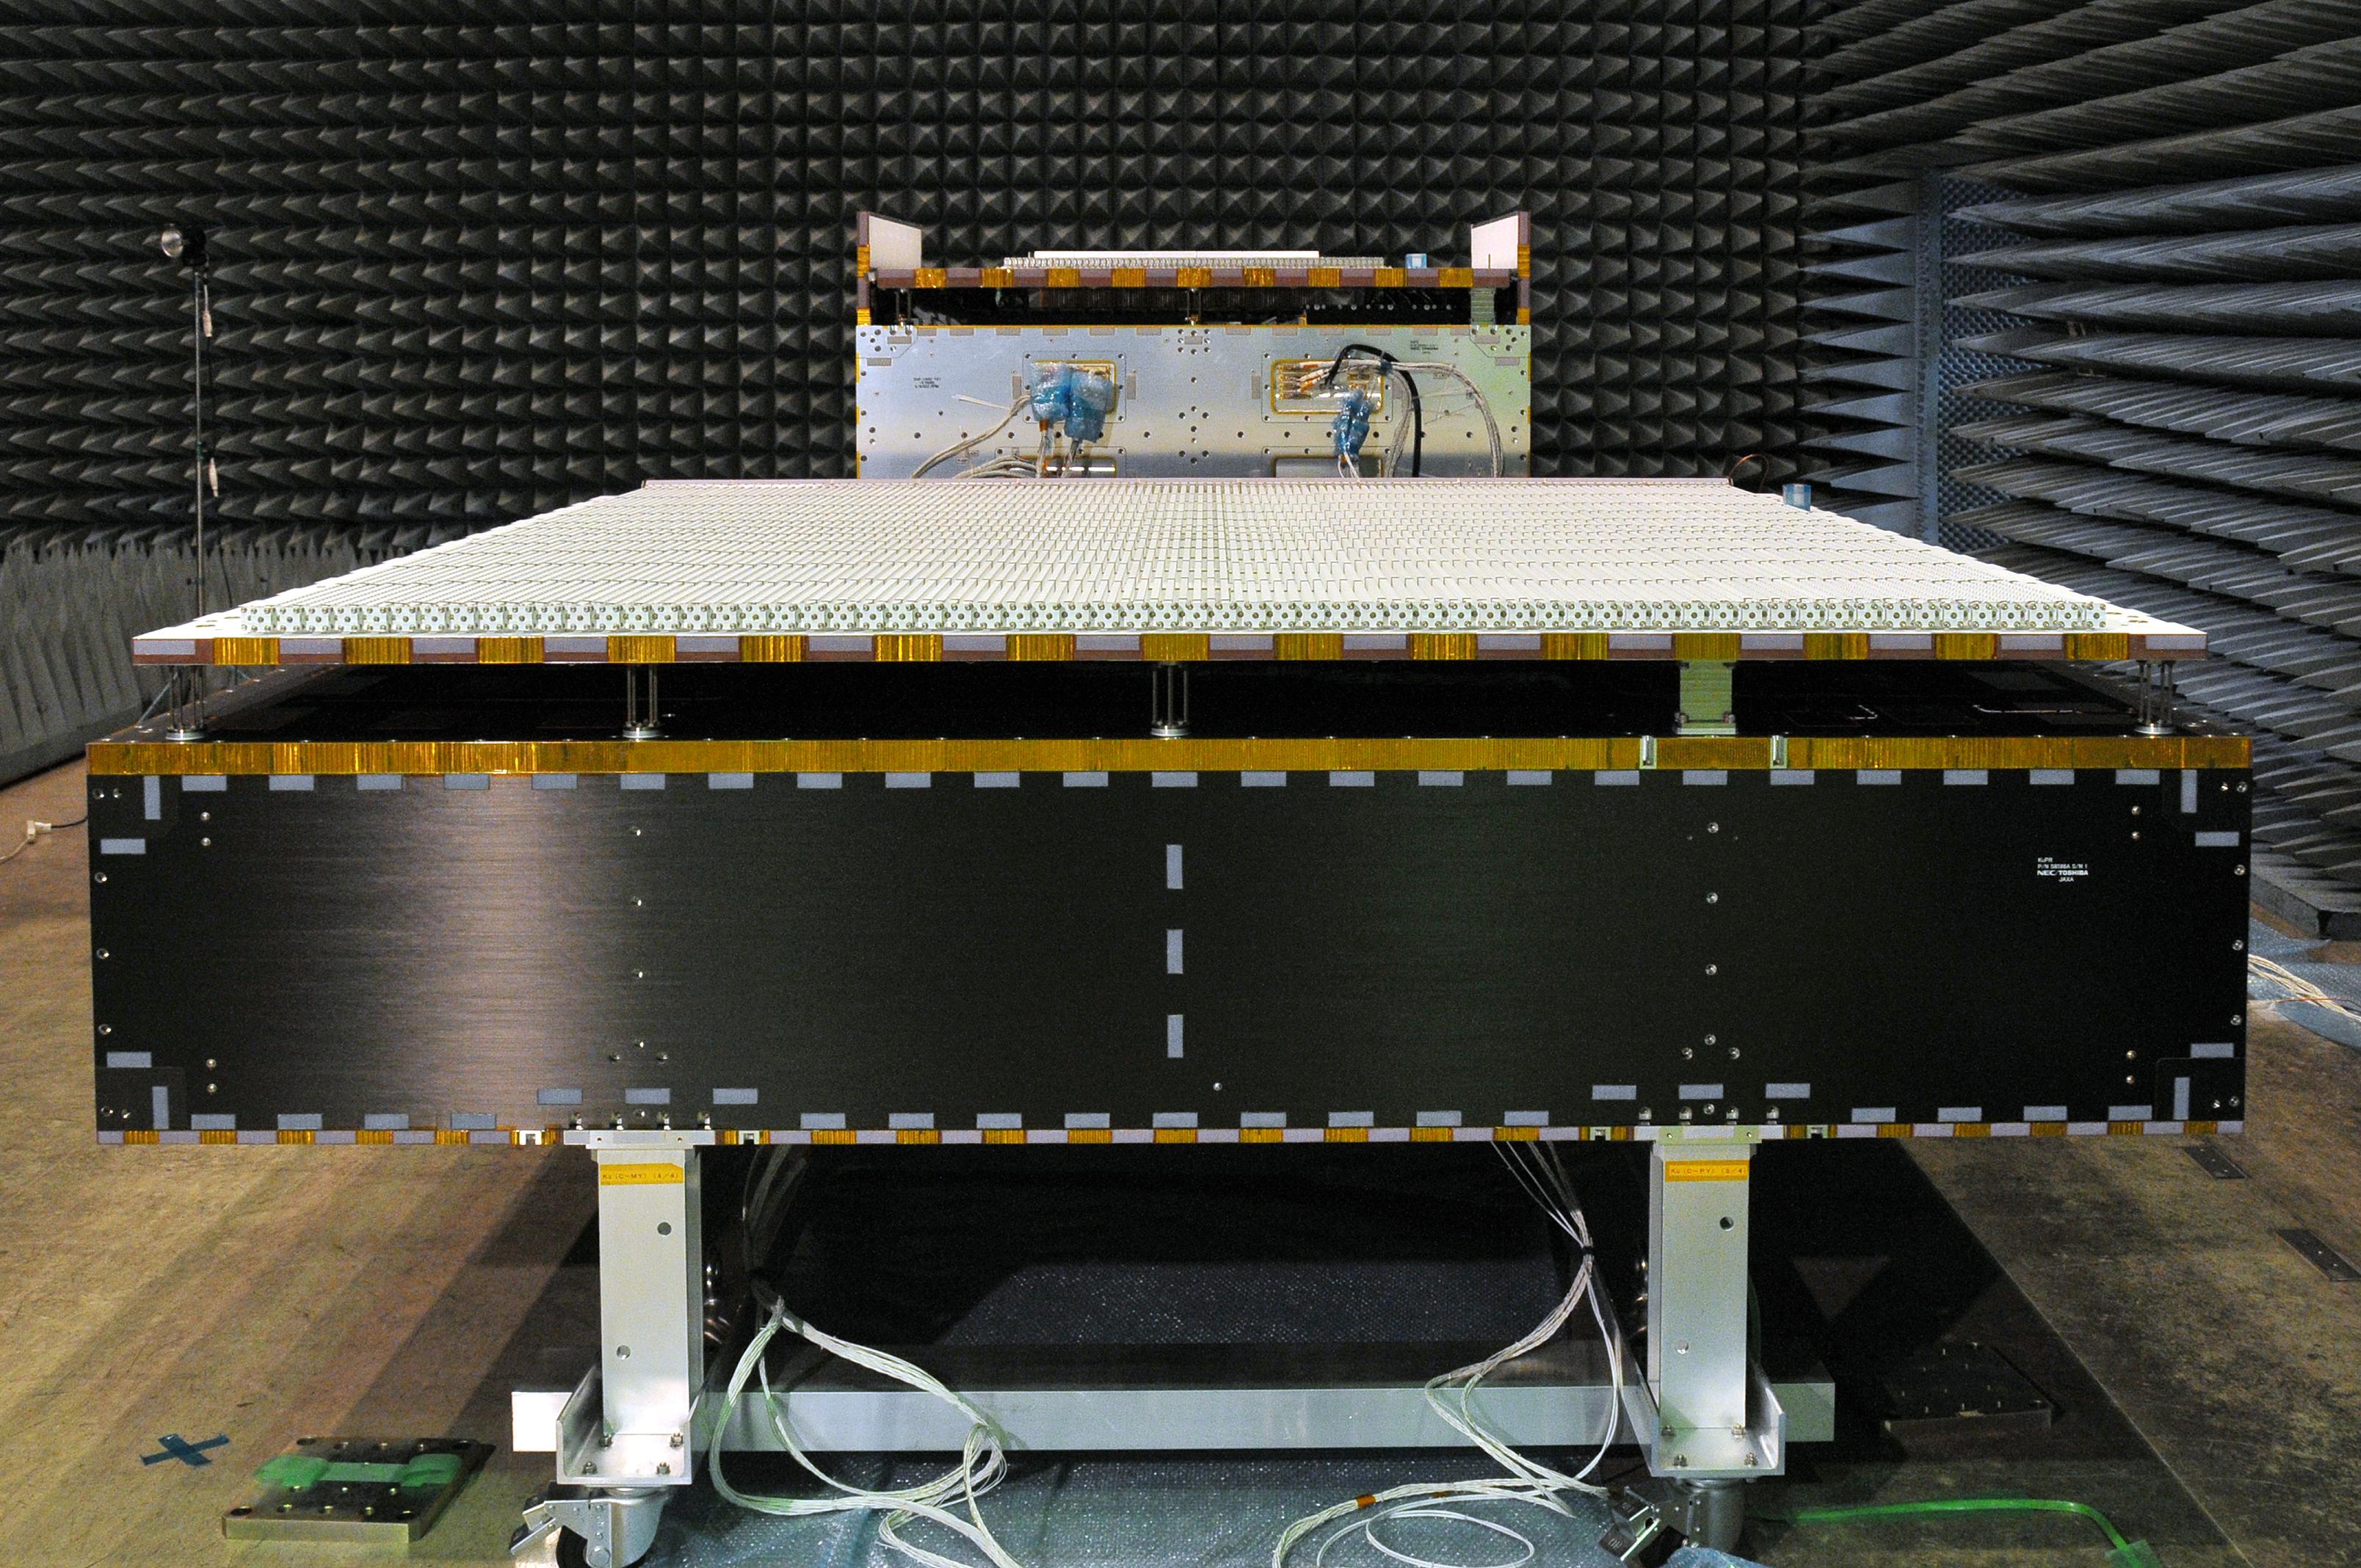 KuPR and KaPR during system level EMI testing at Tsukuba Space Center, Japan